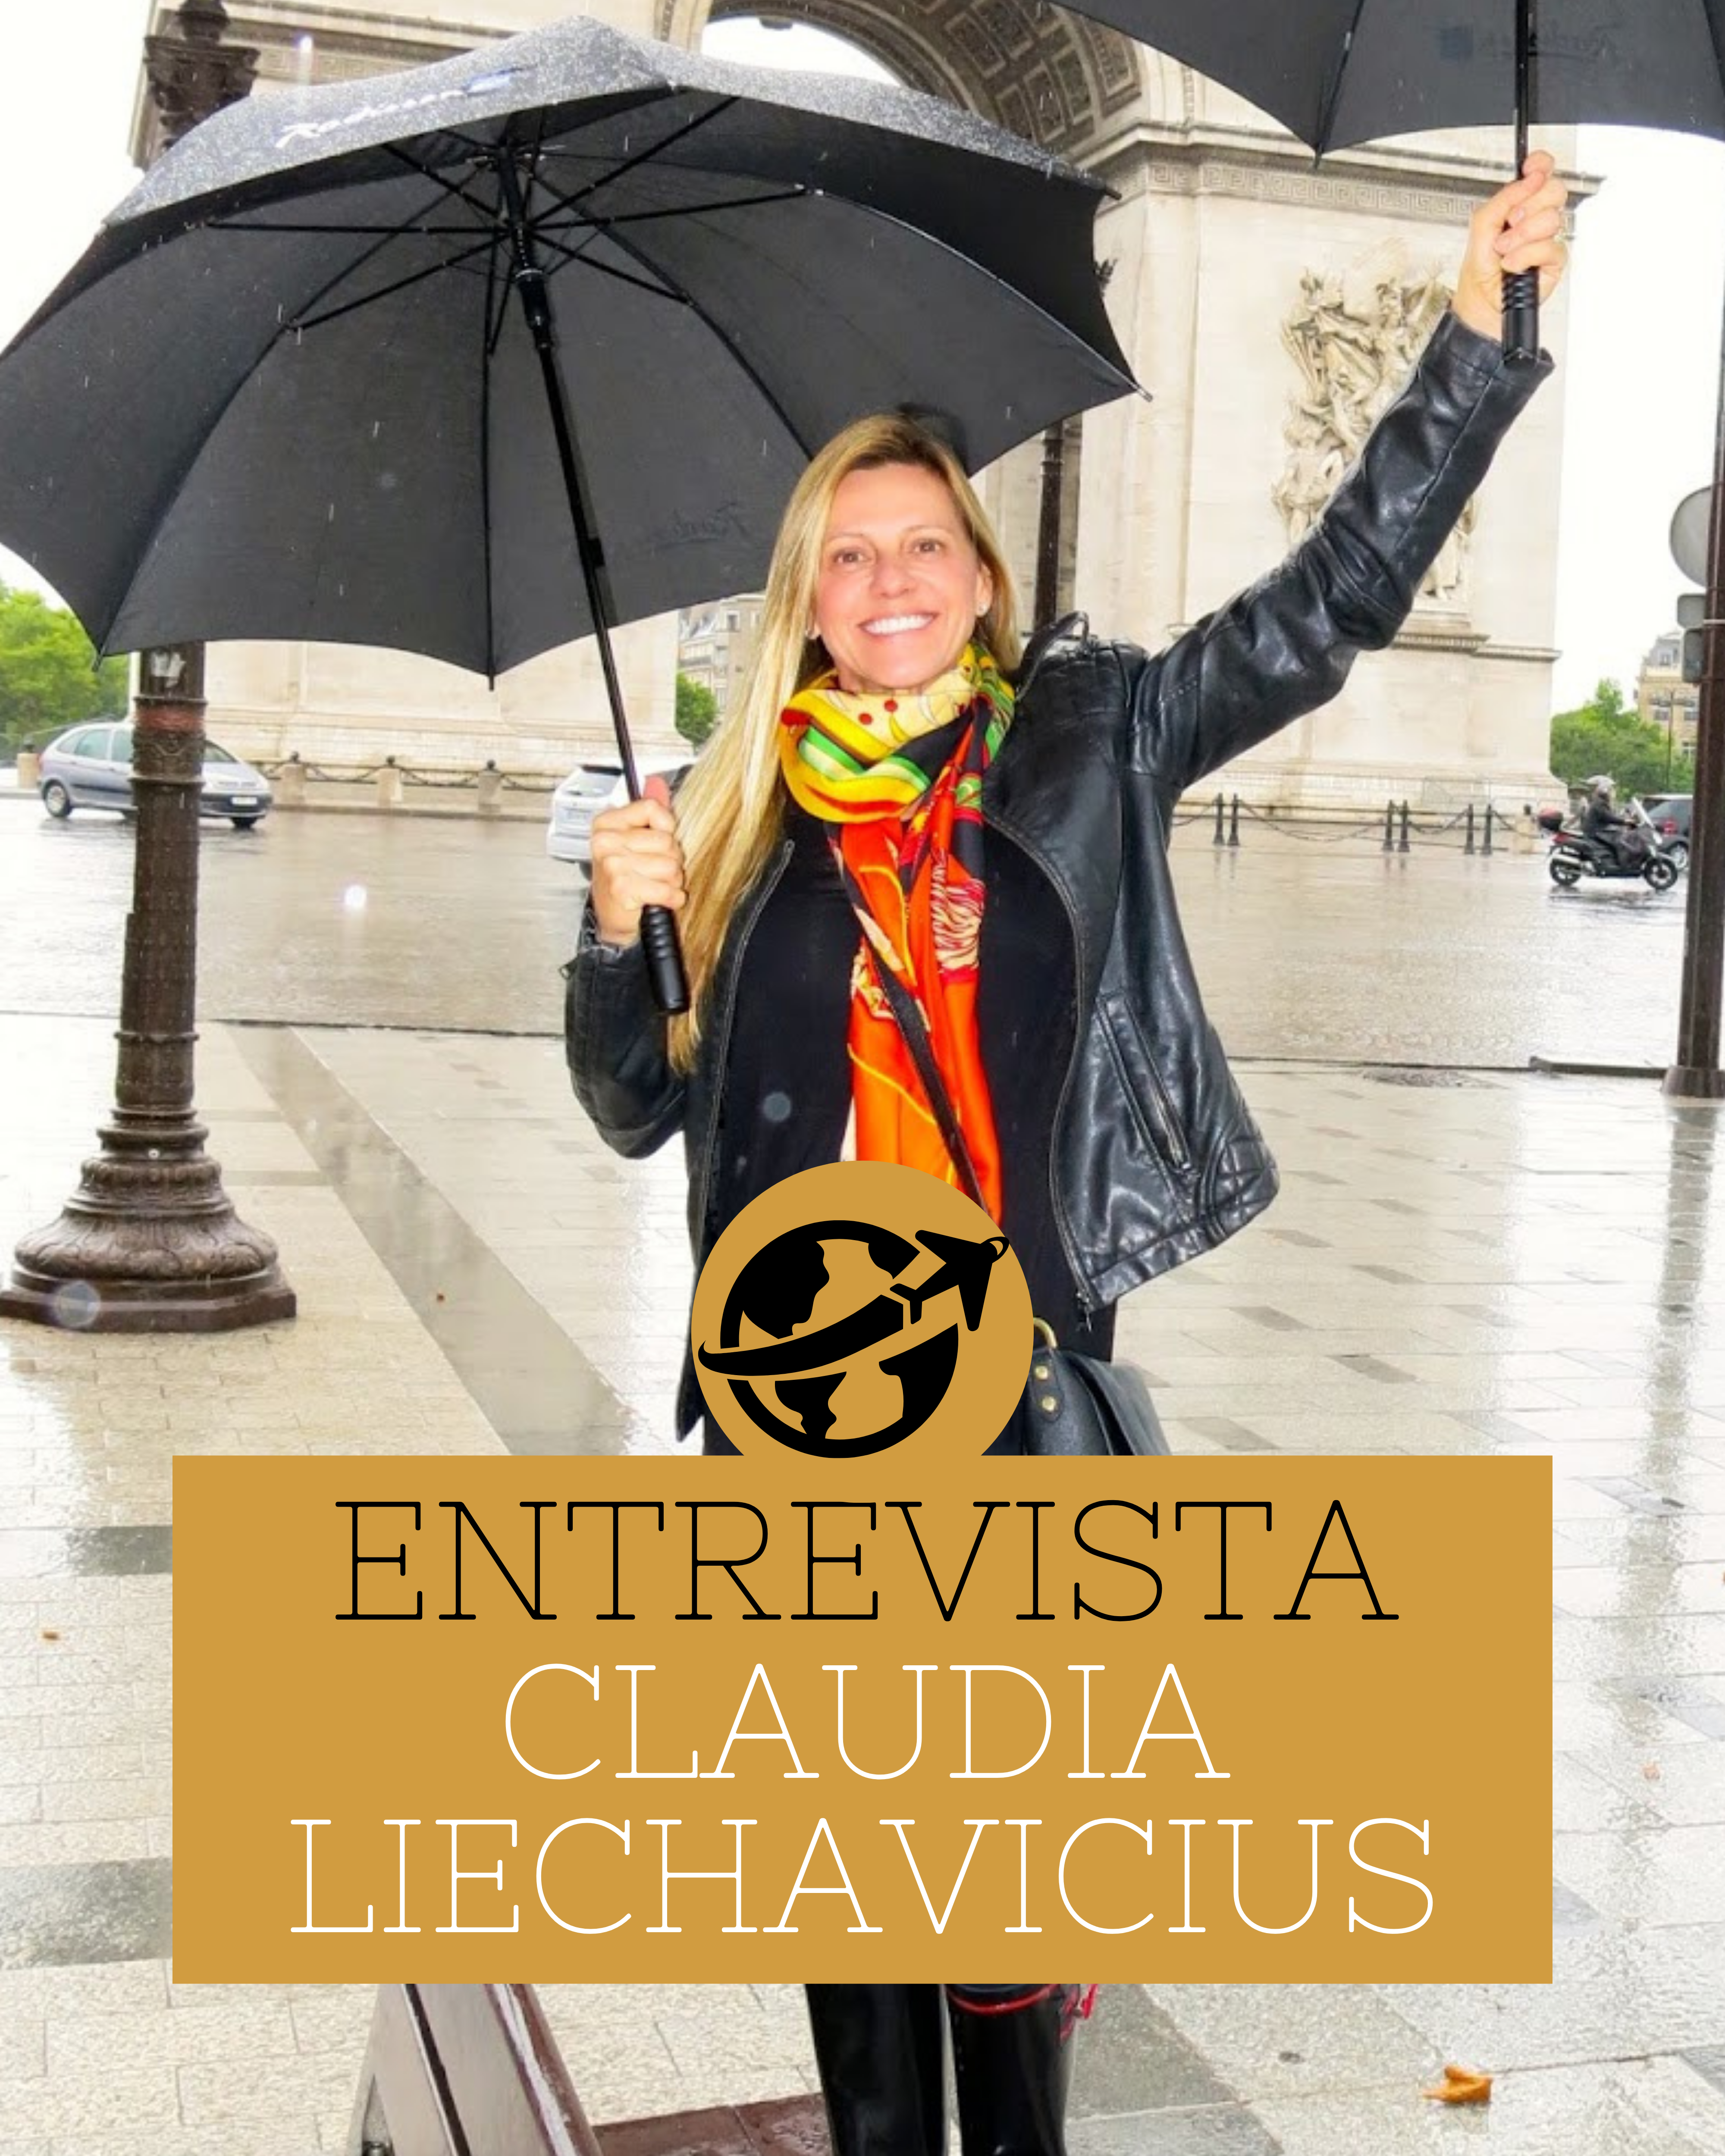 Entrevista Claudia Liechavicius